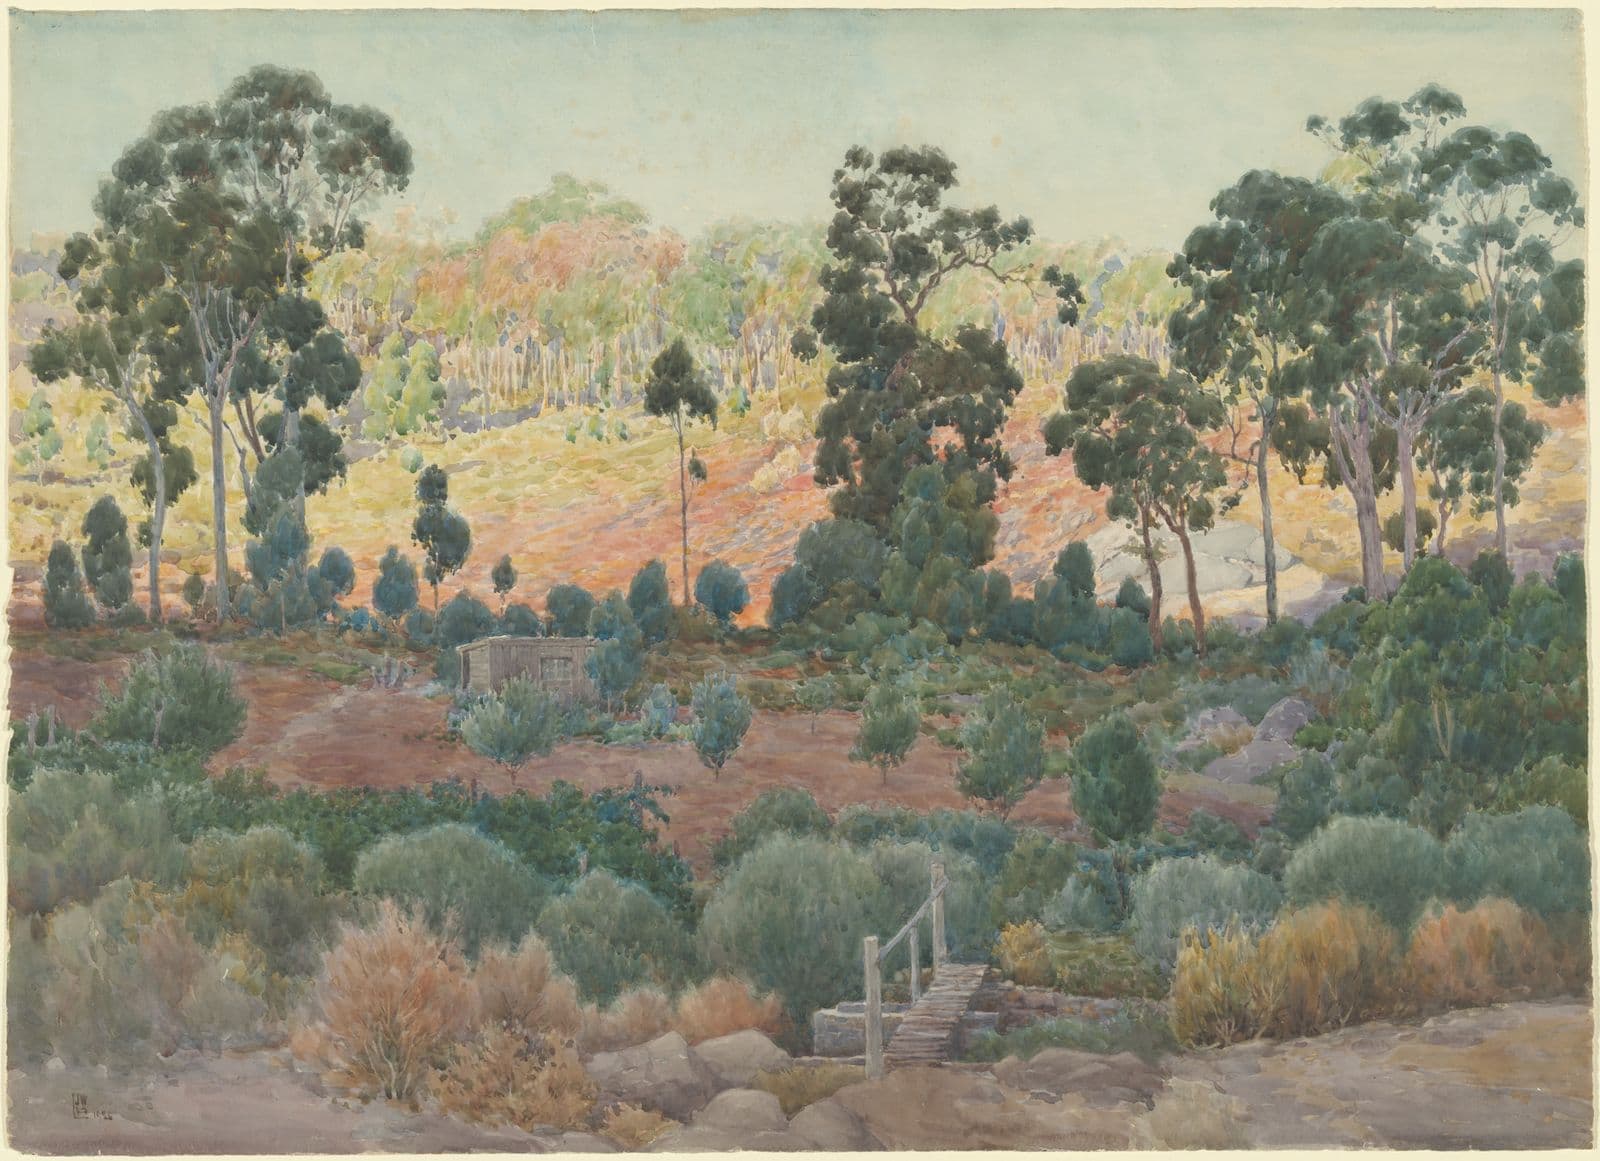 Landscape of native bushland in Western Australia